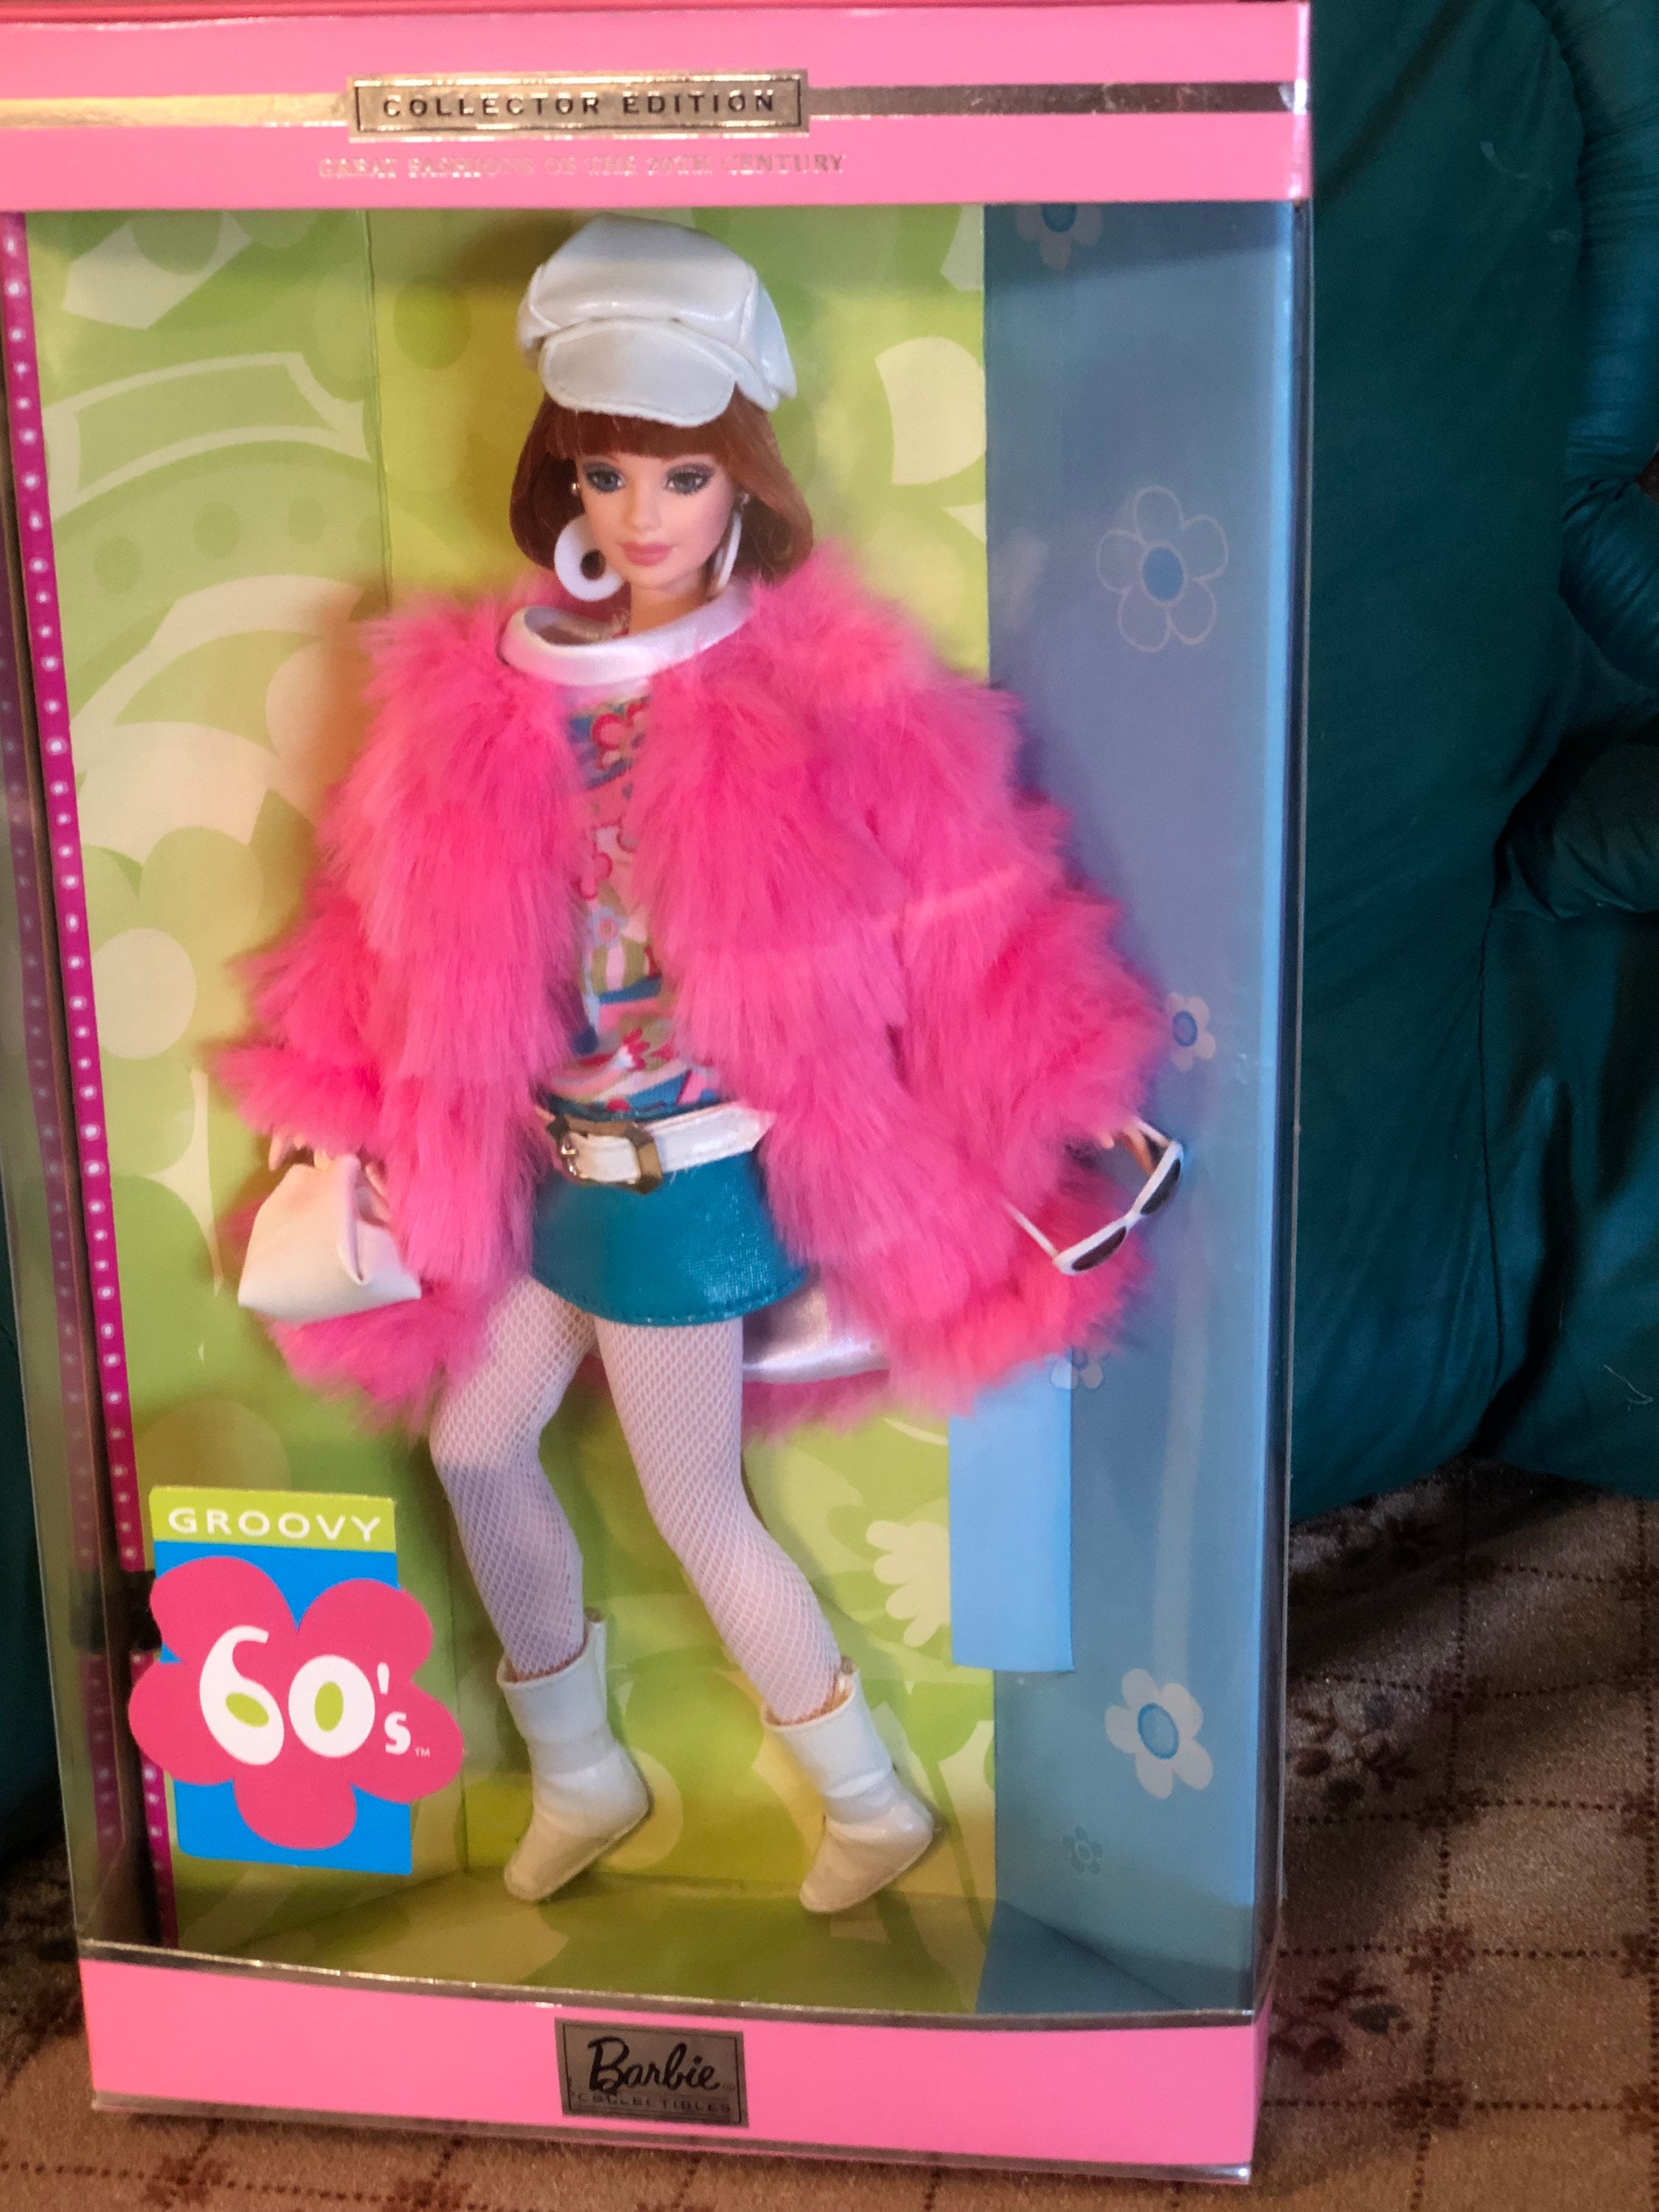 Barbie Roupas Fashion Casaco de Inverno Rosa - Mattel